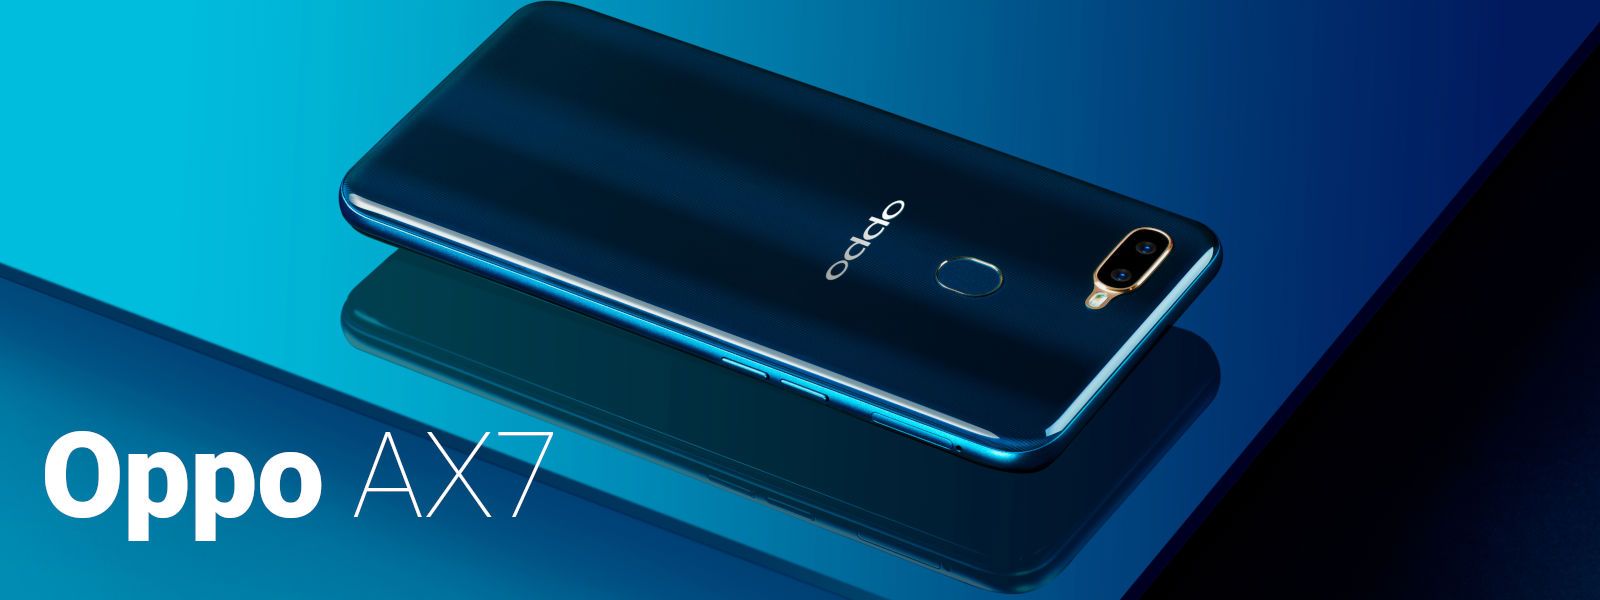 OPPO AX7 smartphone - πλεονεκτήματα και μειονεκτήματα